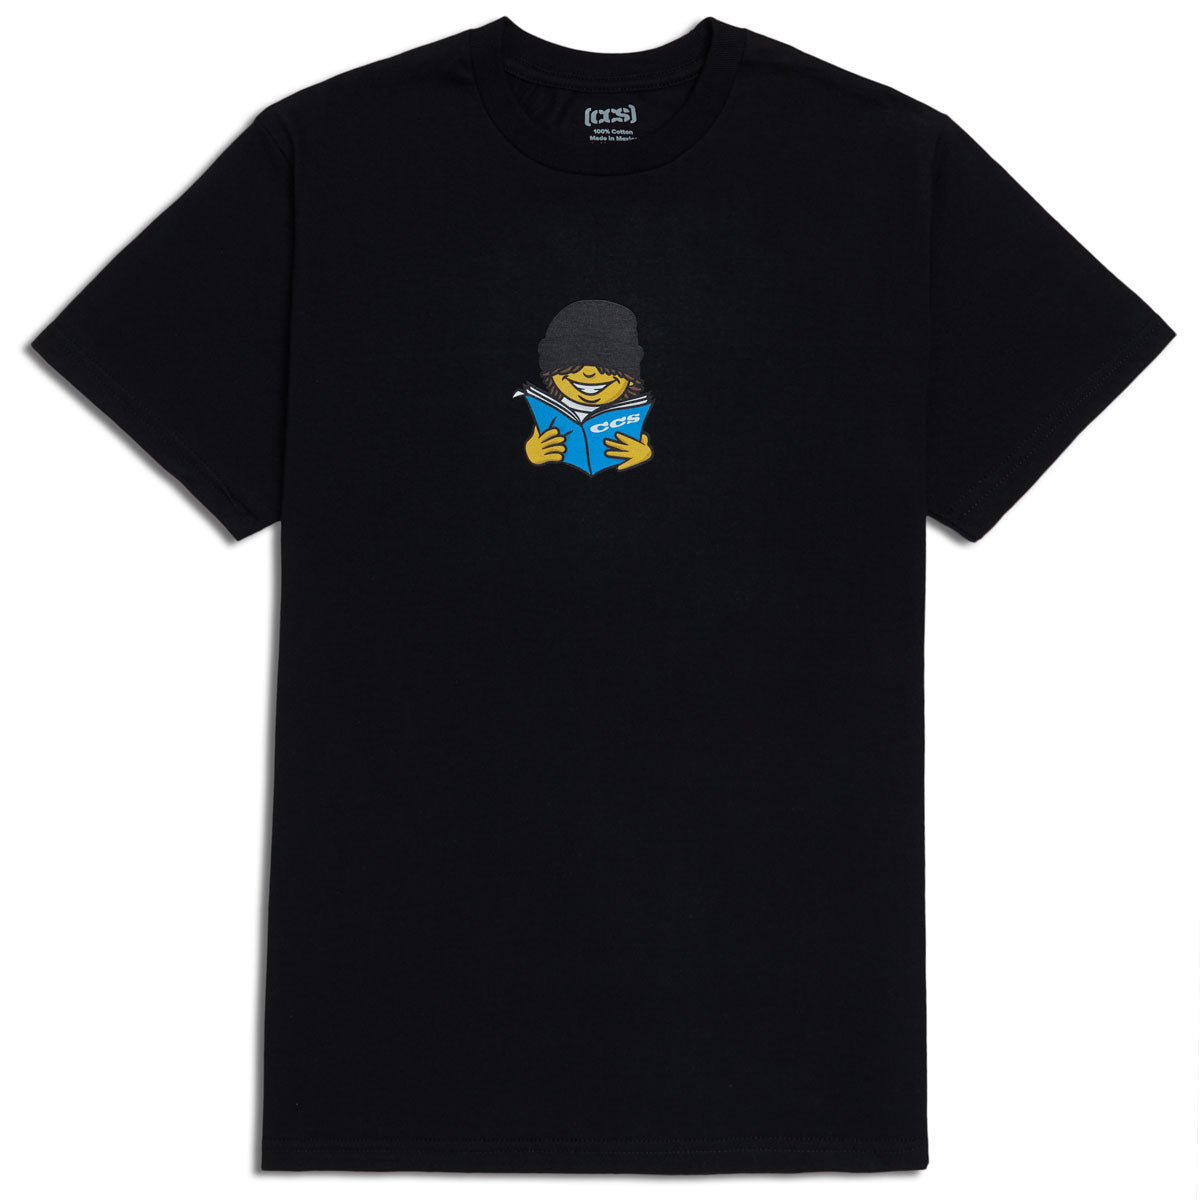 CCS Catalog Kid T-Shirt - Black image 1